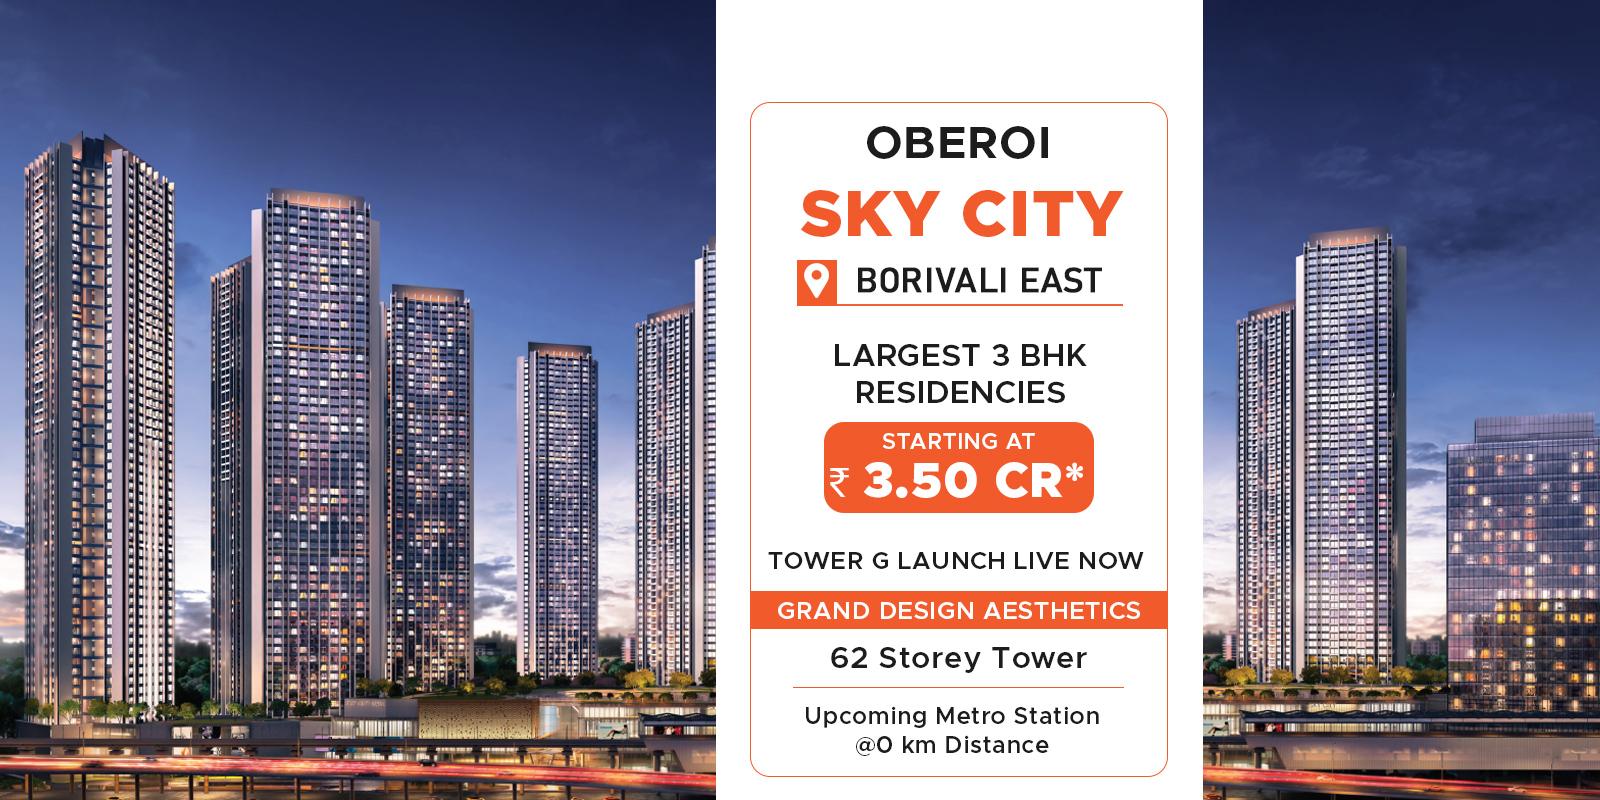 Oberoi Sky City Borivali East 2 3 Bhk price-Oberoi-Sky-City-banner.jpg